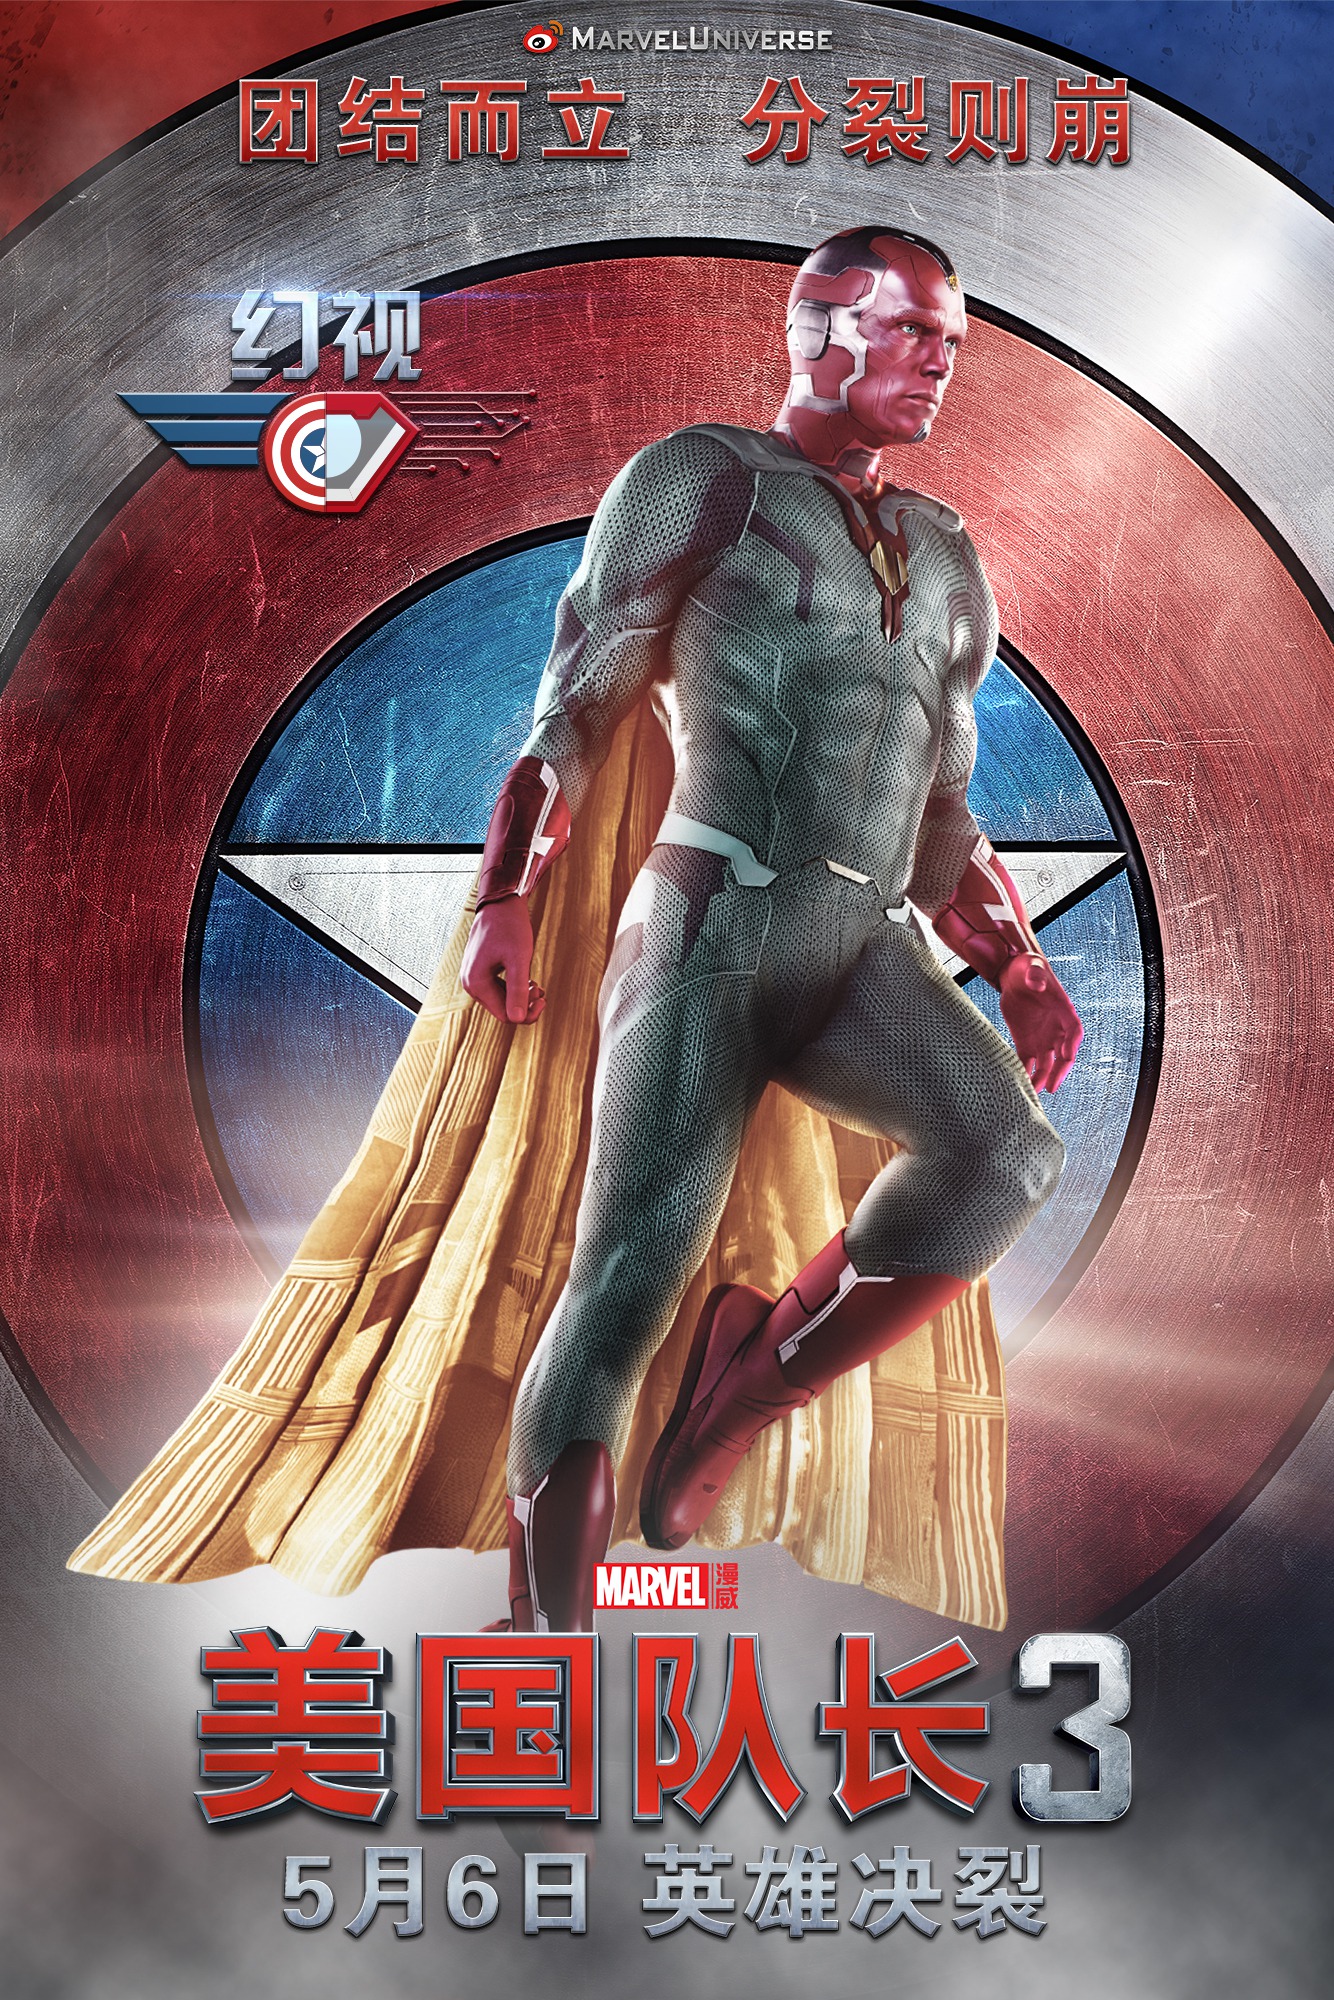 Mega Sized Movie Poster Image for Captain America: Civil War (#35 of 42)